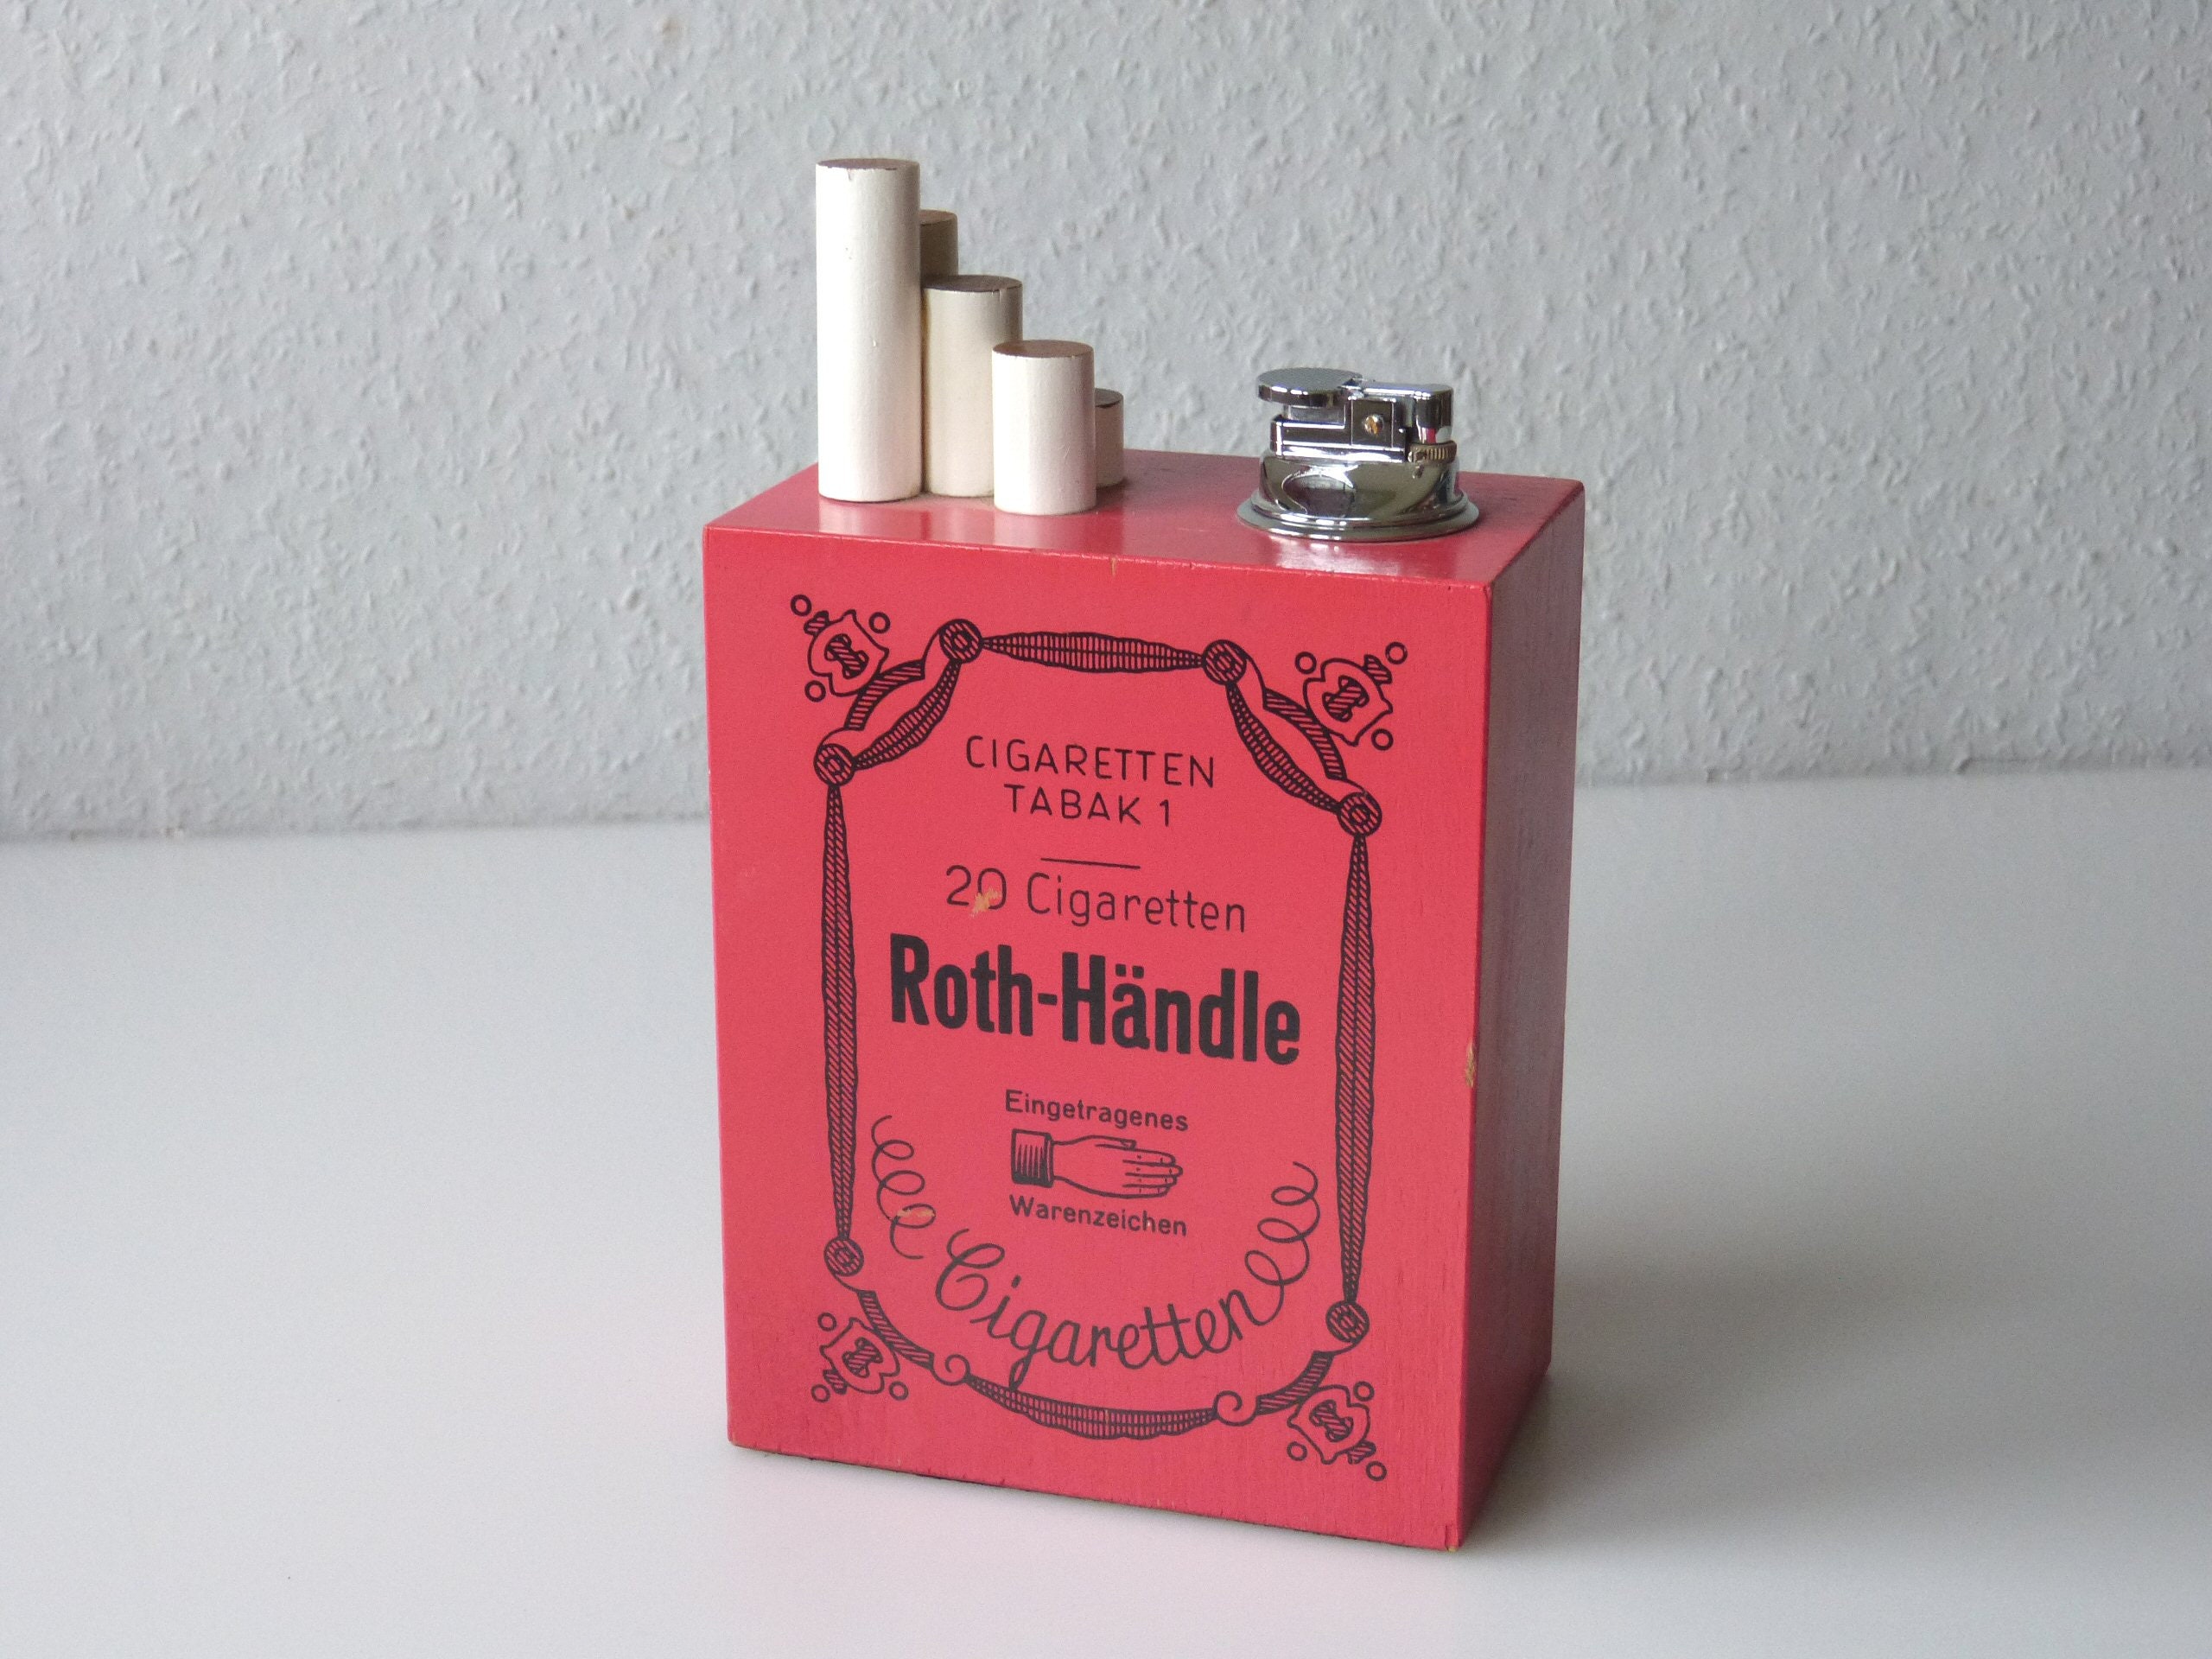 Accessoires de Cigarettes - Tabakfabrik Roth